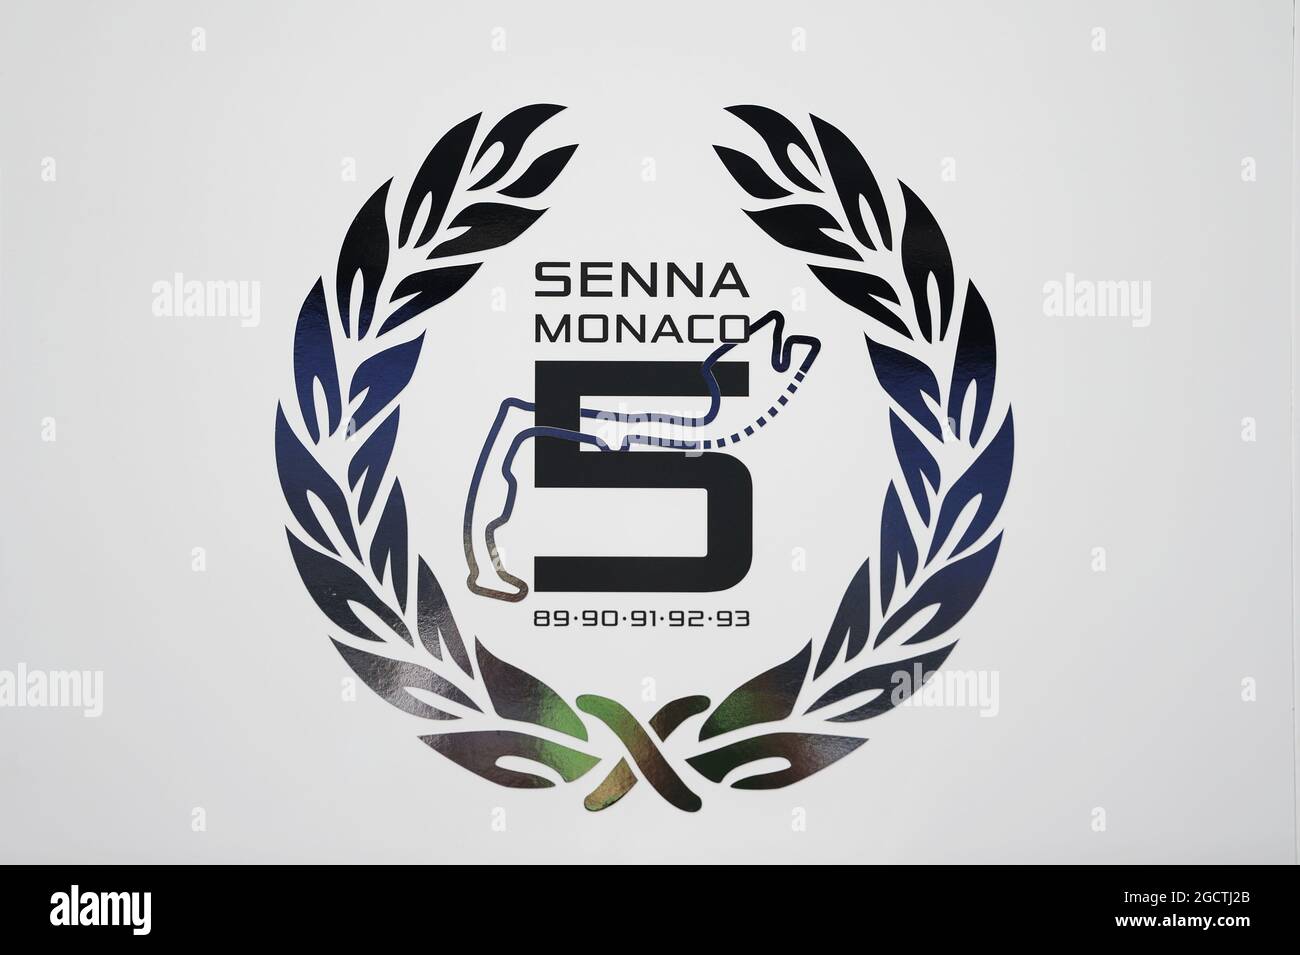 McLaren celebrate five Monaco GP victories for Ayrton Senna. Monaco Grand Prix, Wednesday 21st May 2014. Monte Carlo, Monaco. Stock Photo